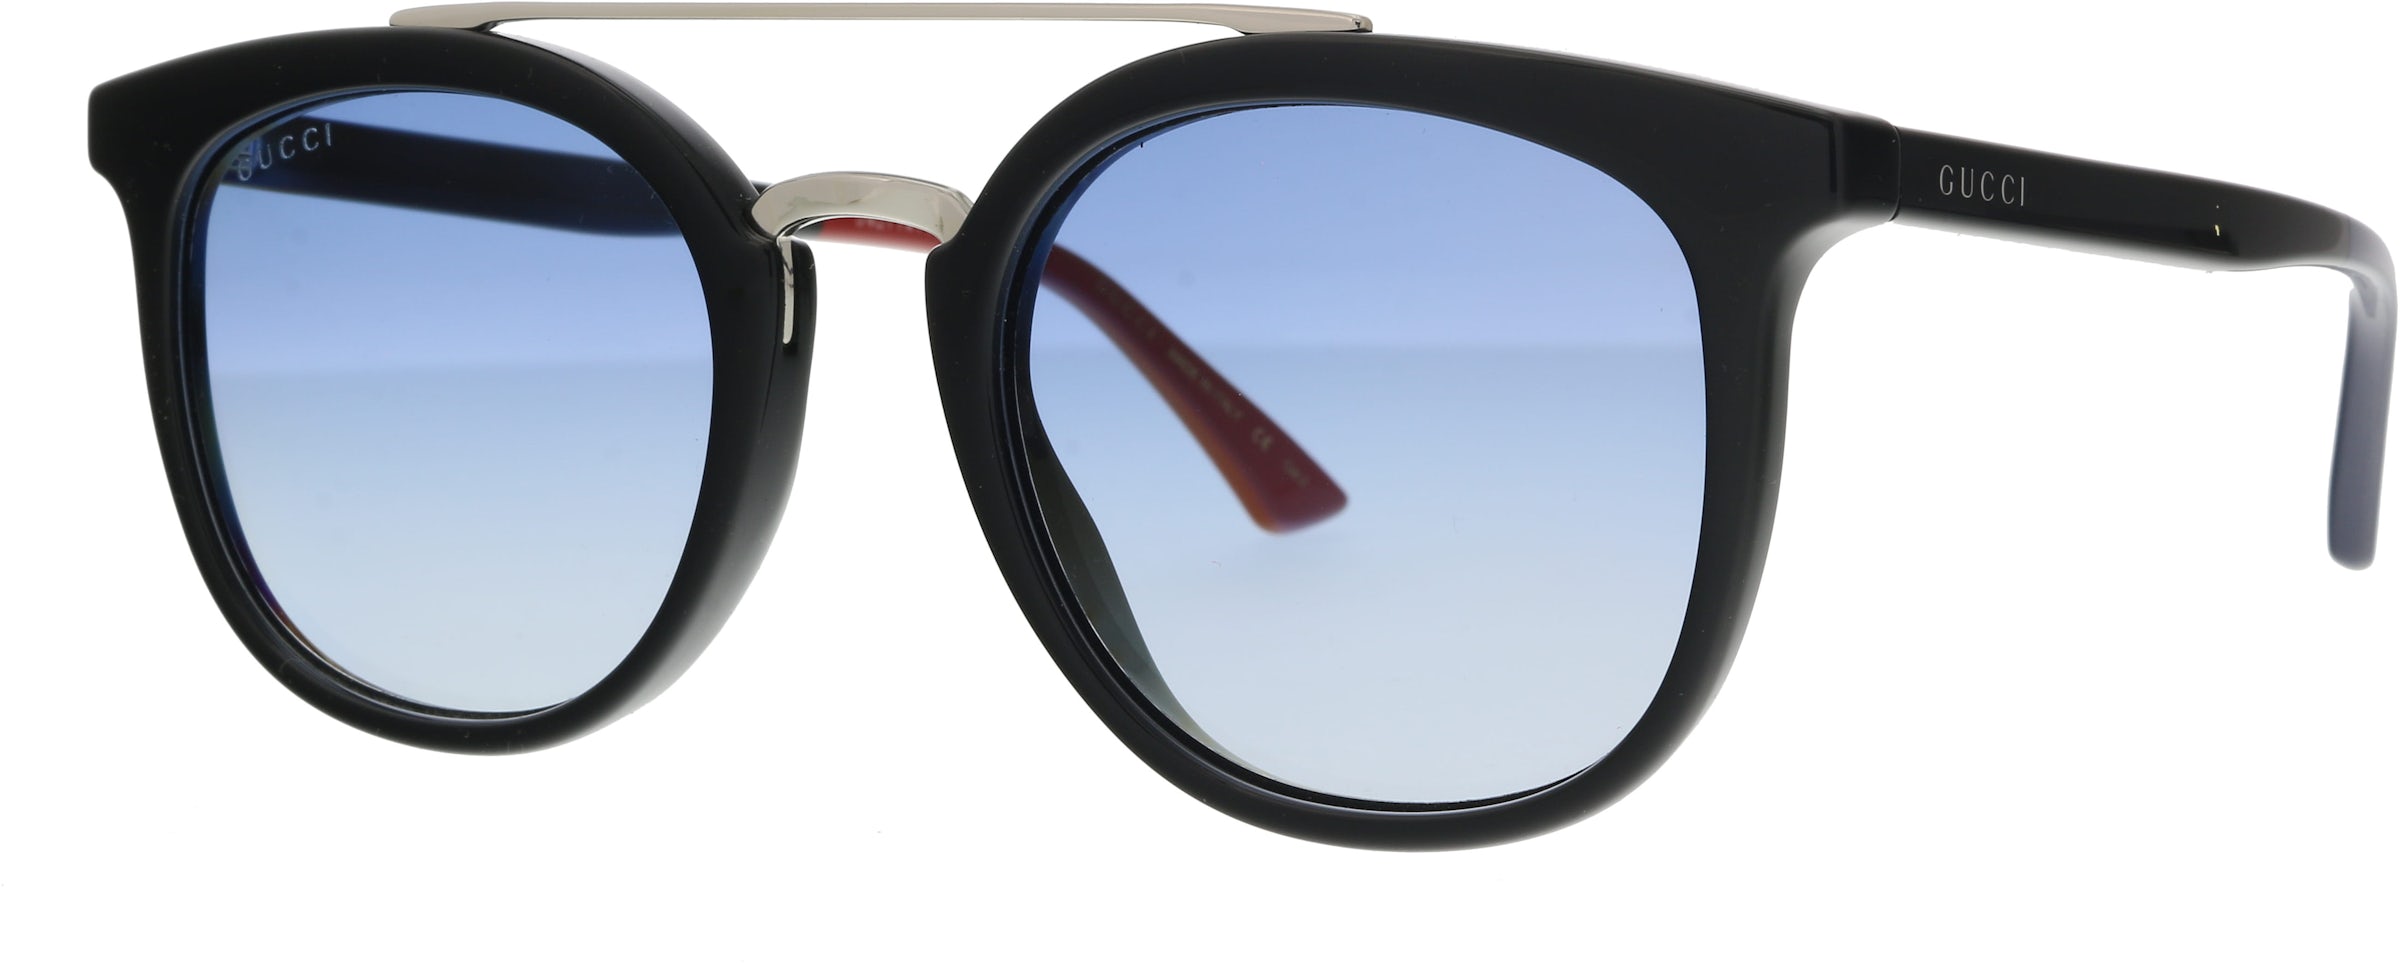 Gucci, Accessories, Nwt Gucci Gg978s 004 Cat Eye Heart Charm Sunglasses